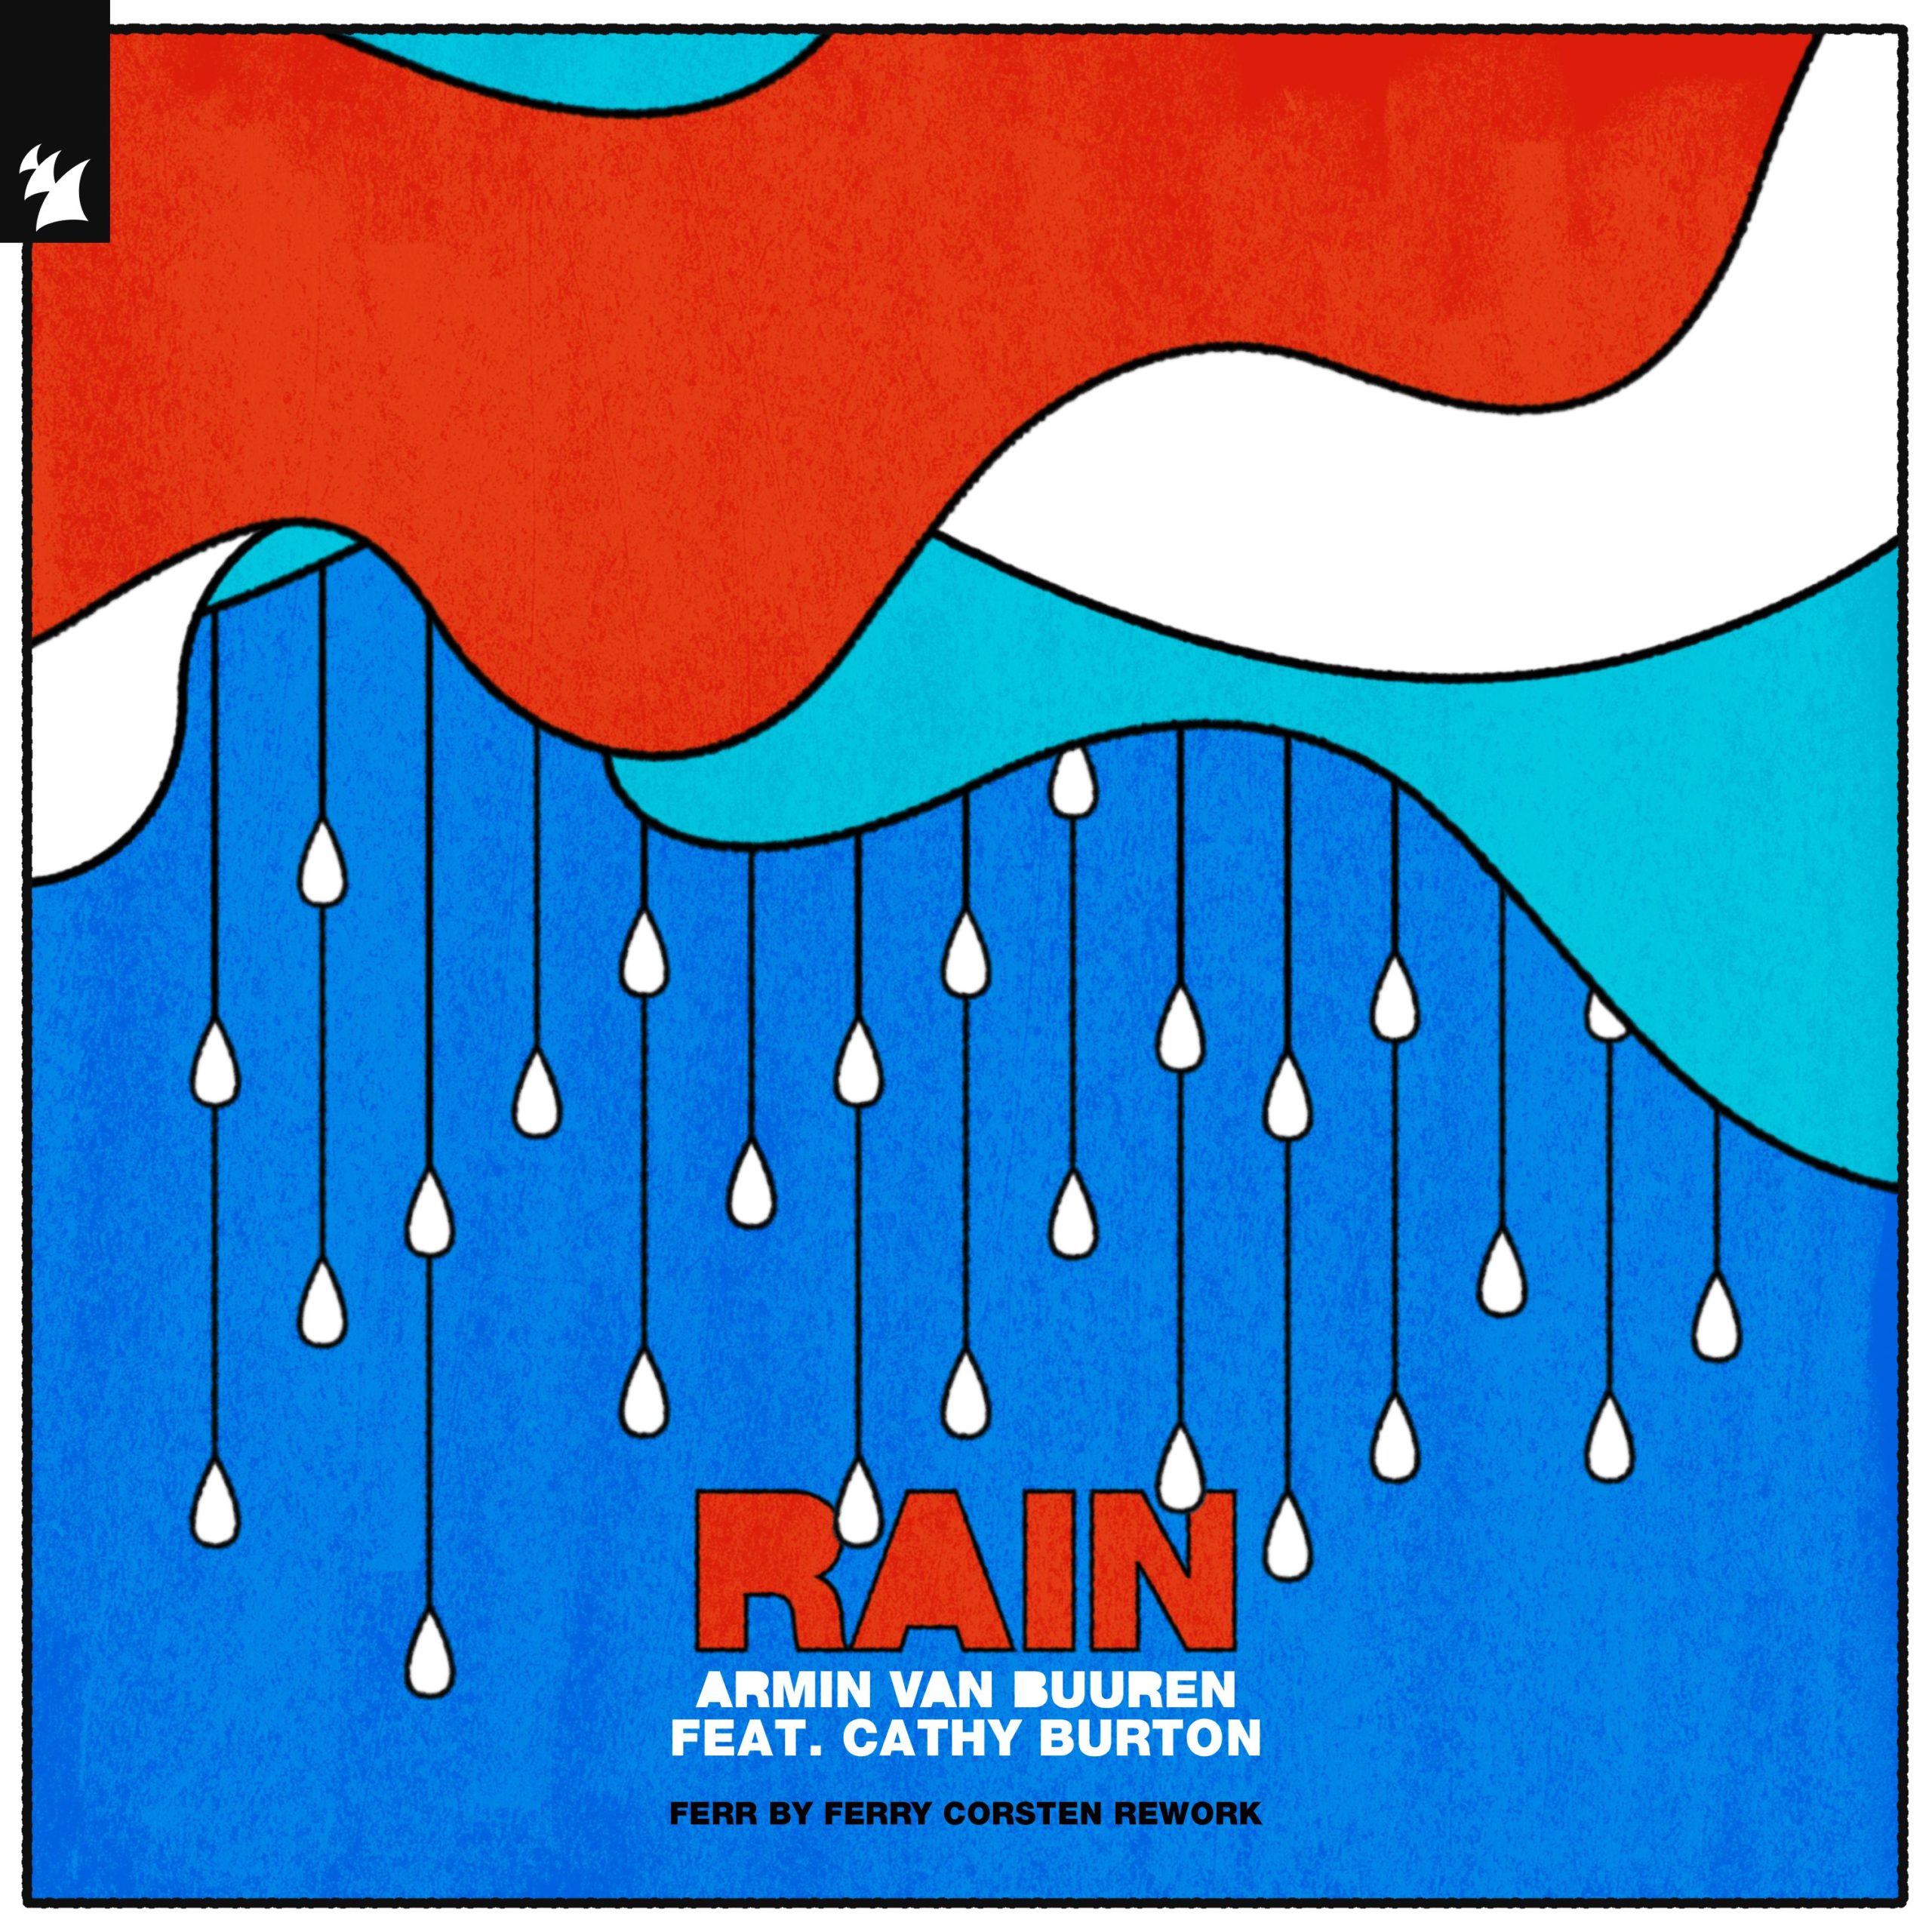 Armin van Buuren feat. Cathy Burton presents Rain (FERR by Ferry Corsten Rework) on Armada Music